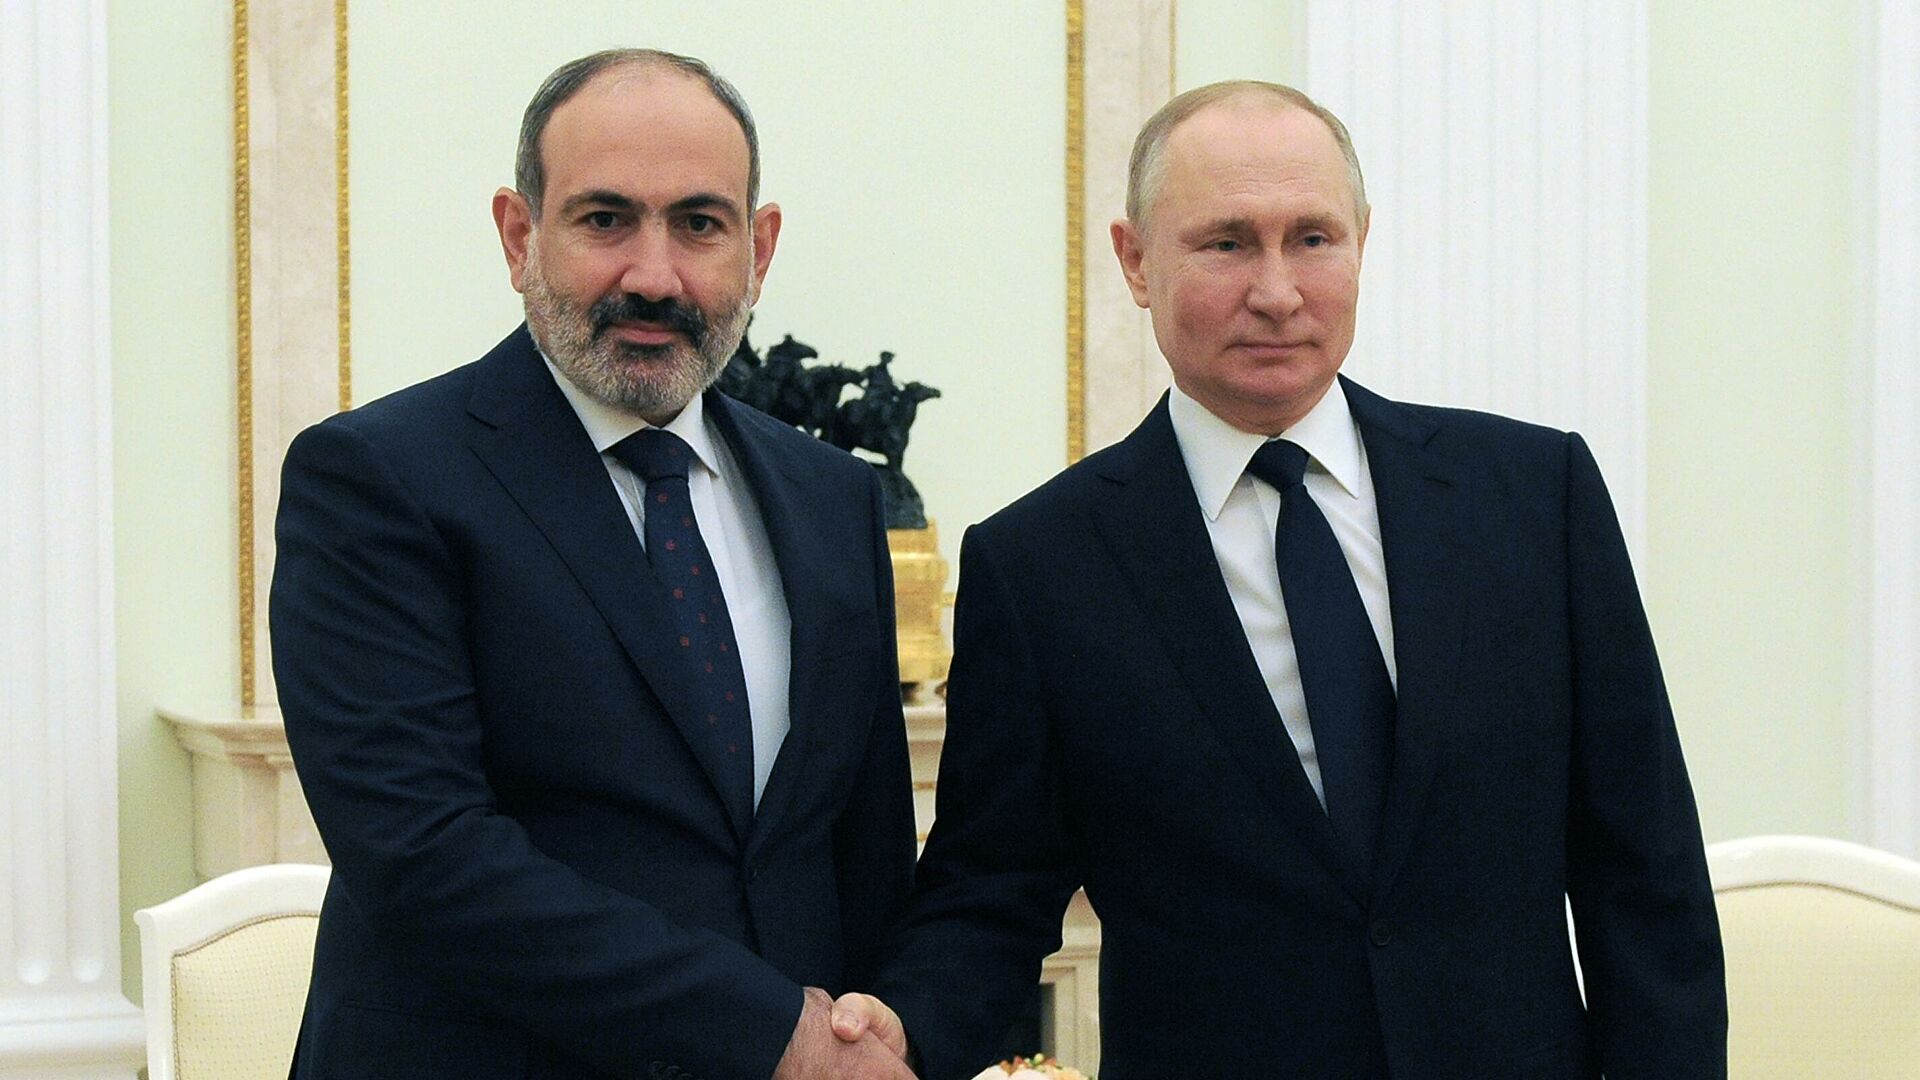 Путин и Пашинян обсудили текущую ситуацию вокруг Карабаха